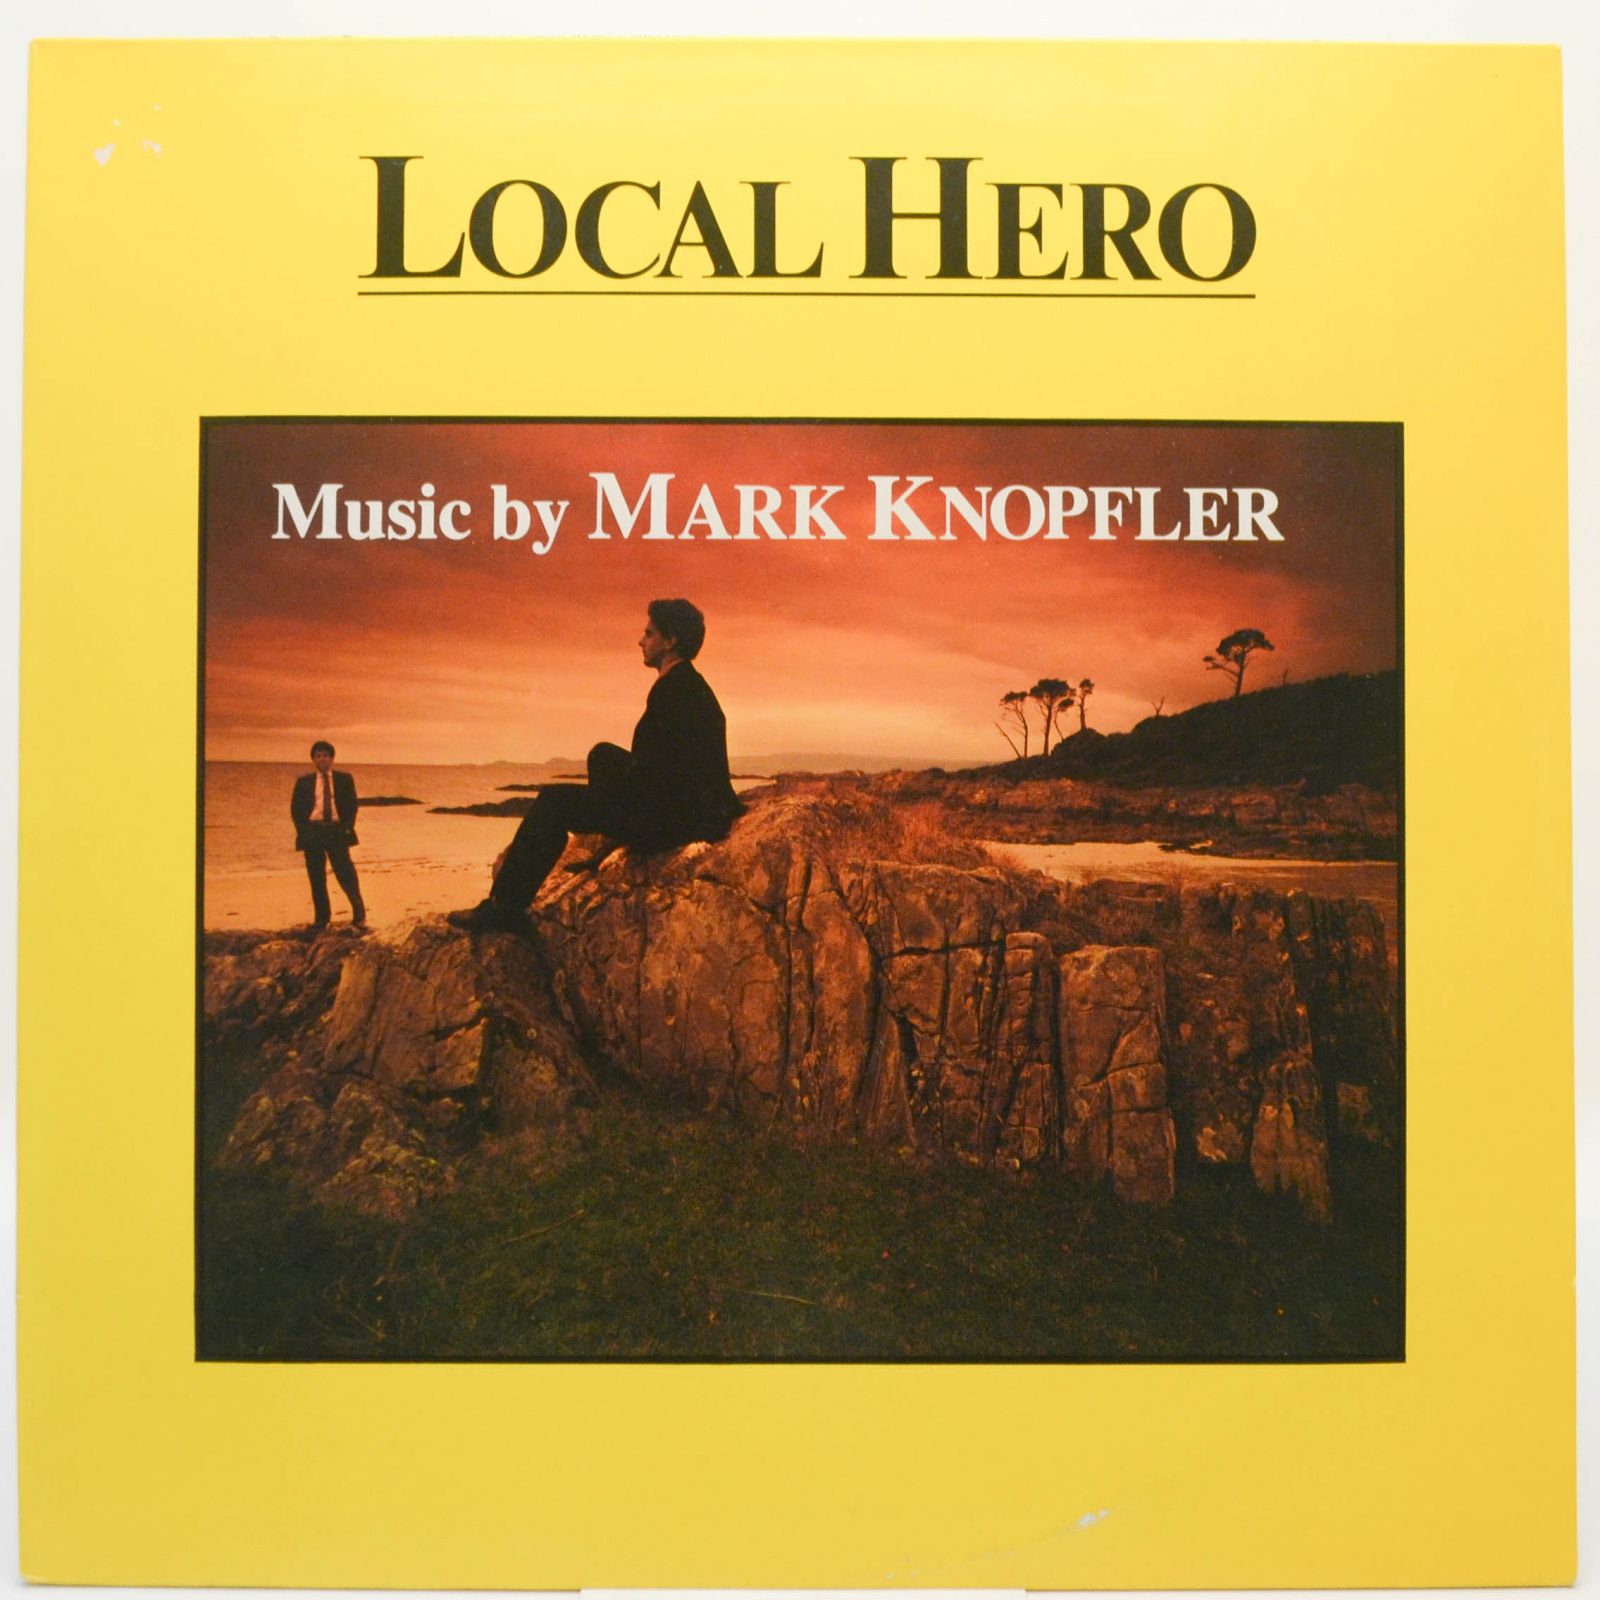 Mark Knopfler — Local Hero, 1983